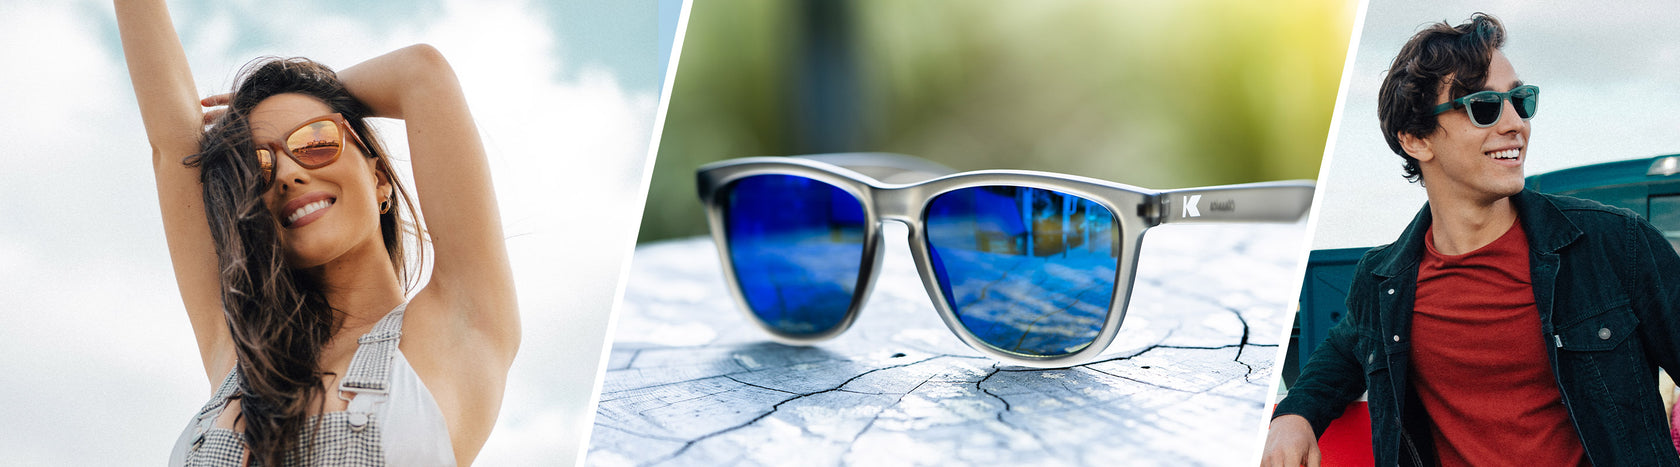 Super Small Round Sunglasses for Men, Gray Lenses